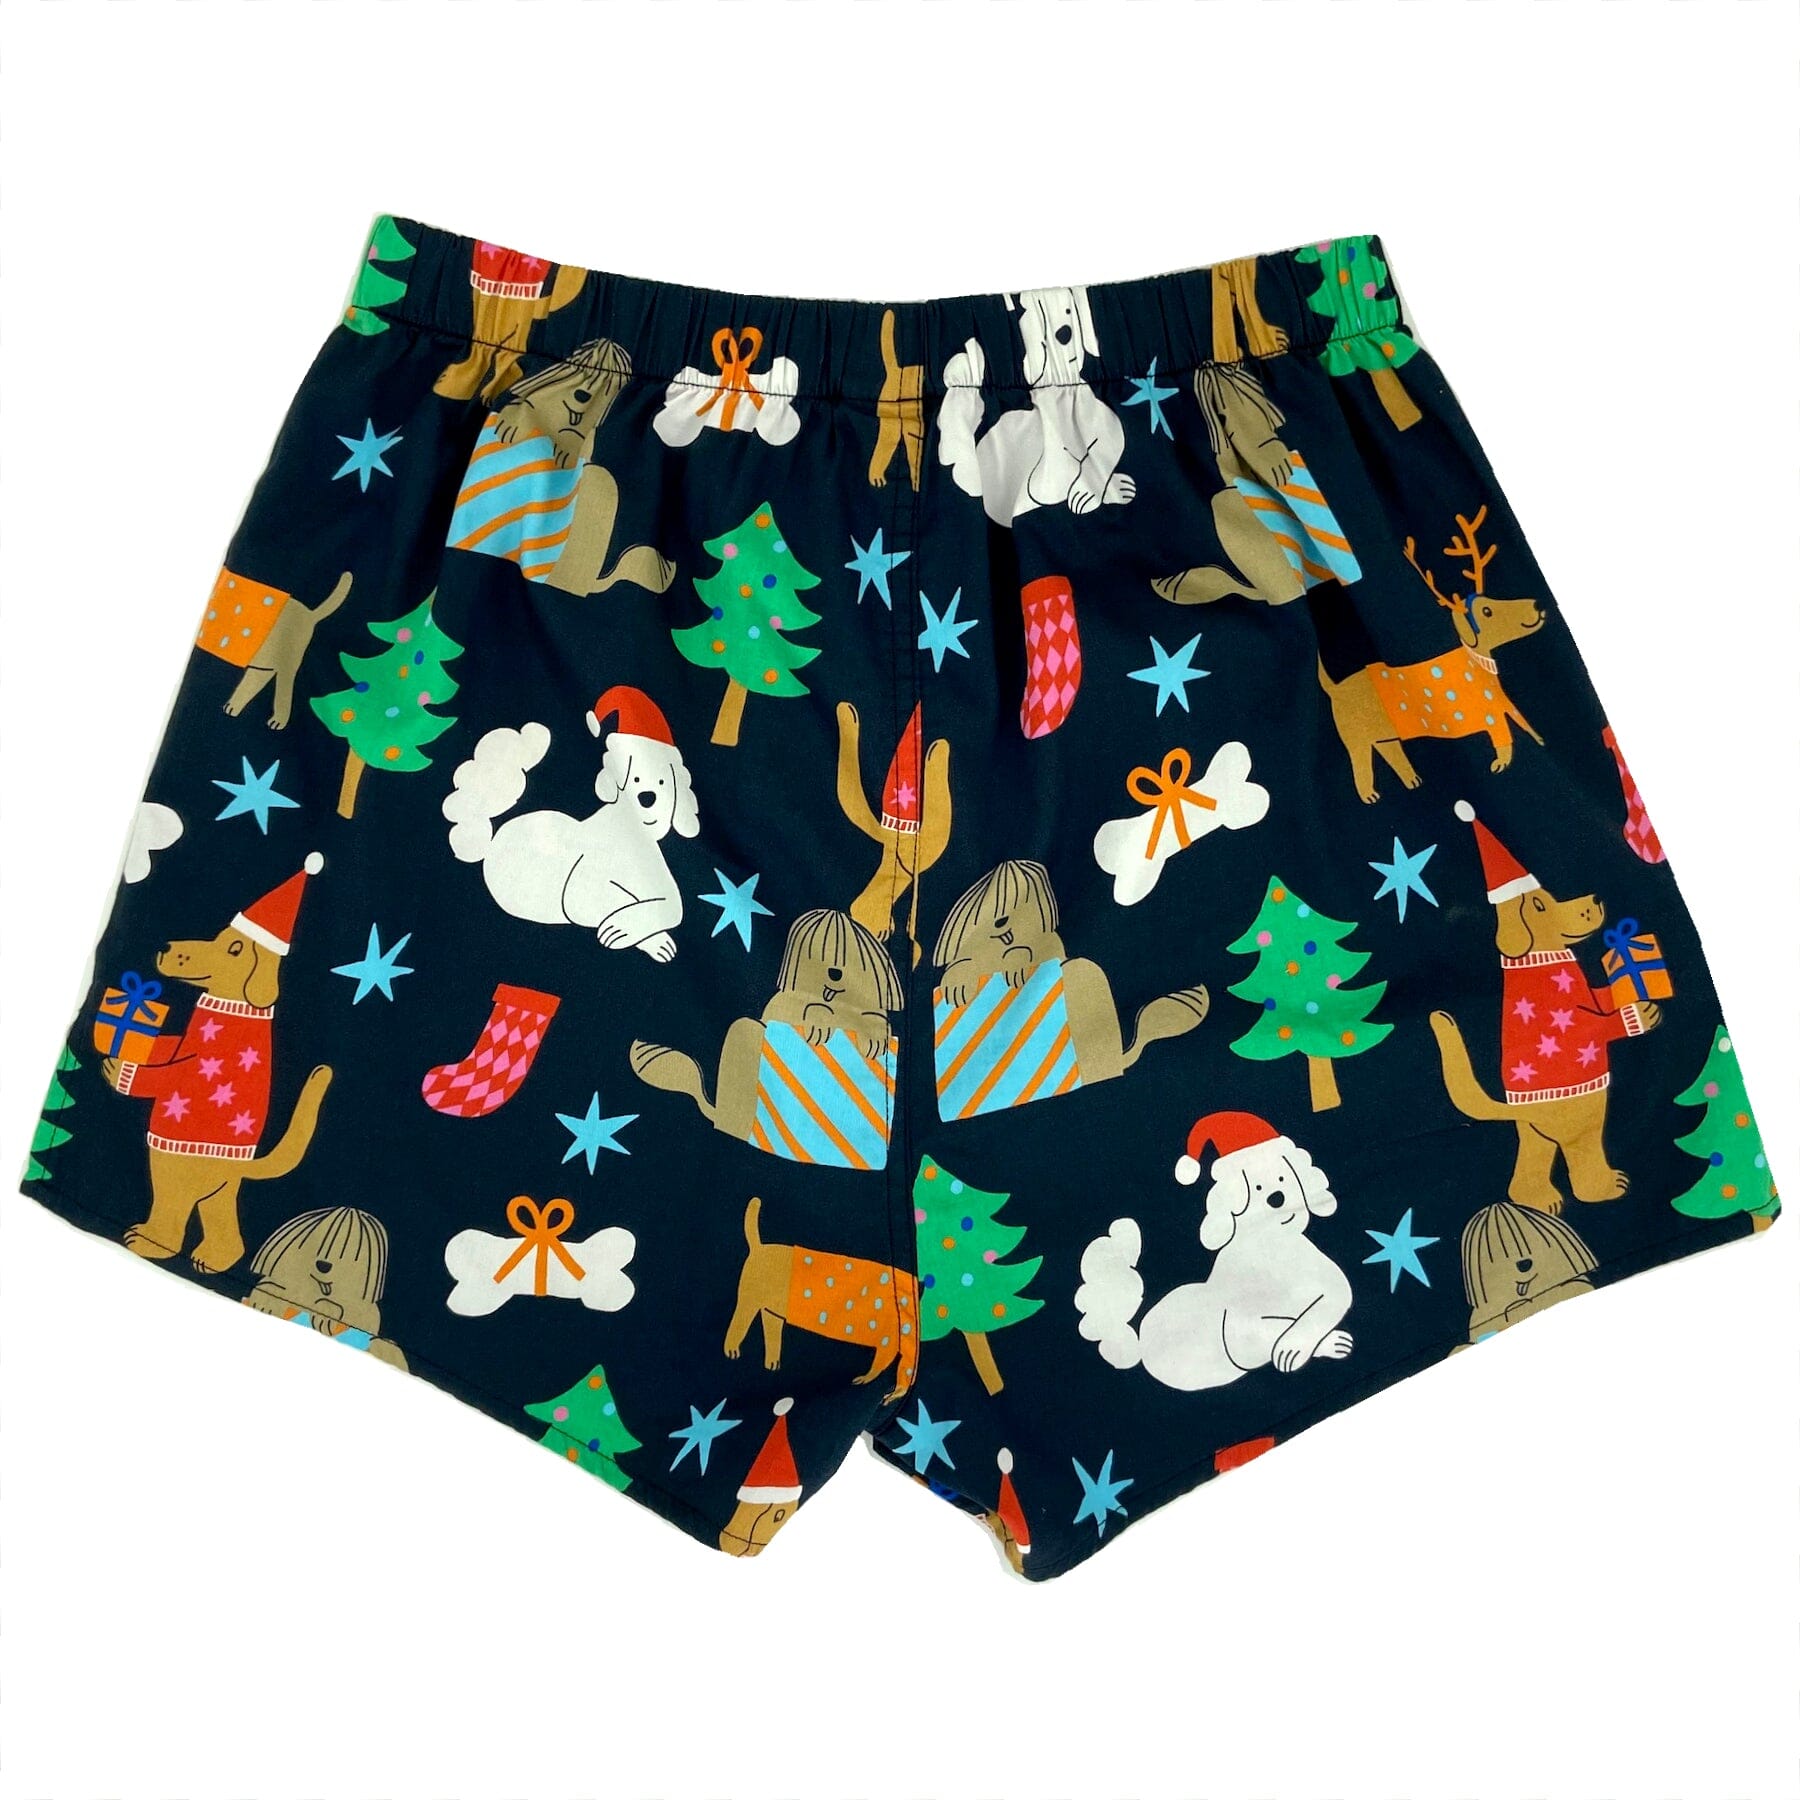 Men's Festive Doggie Christmas Holiday Novelty Patterned Boxer Shorts